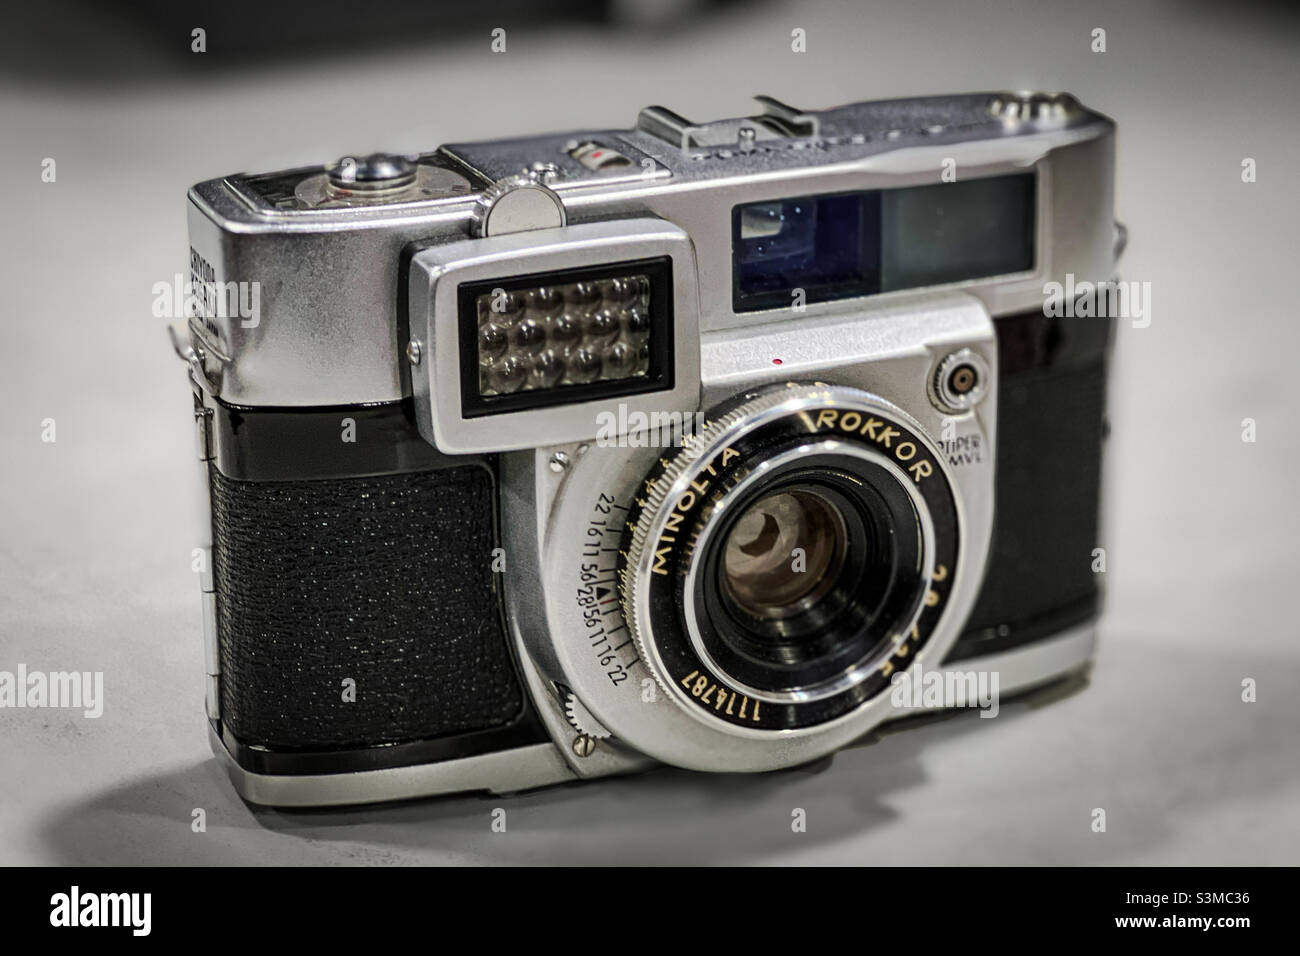 Minolta Auto Wide rangefinder film camera with a Minolta Rokkor 35mm/f2.8 wide angle lens Stock Photo